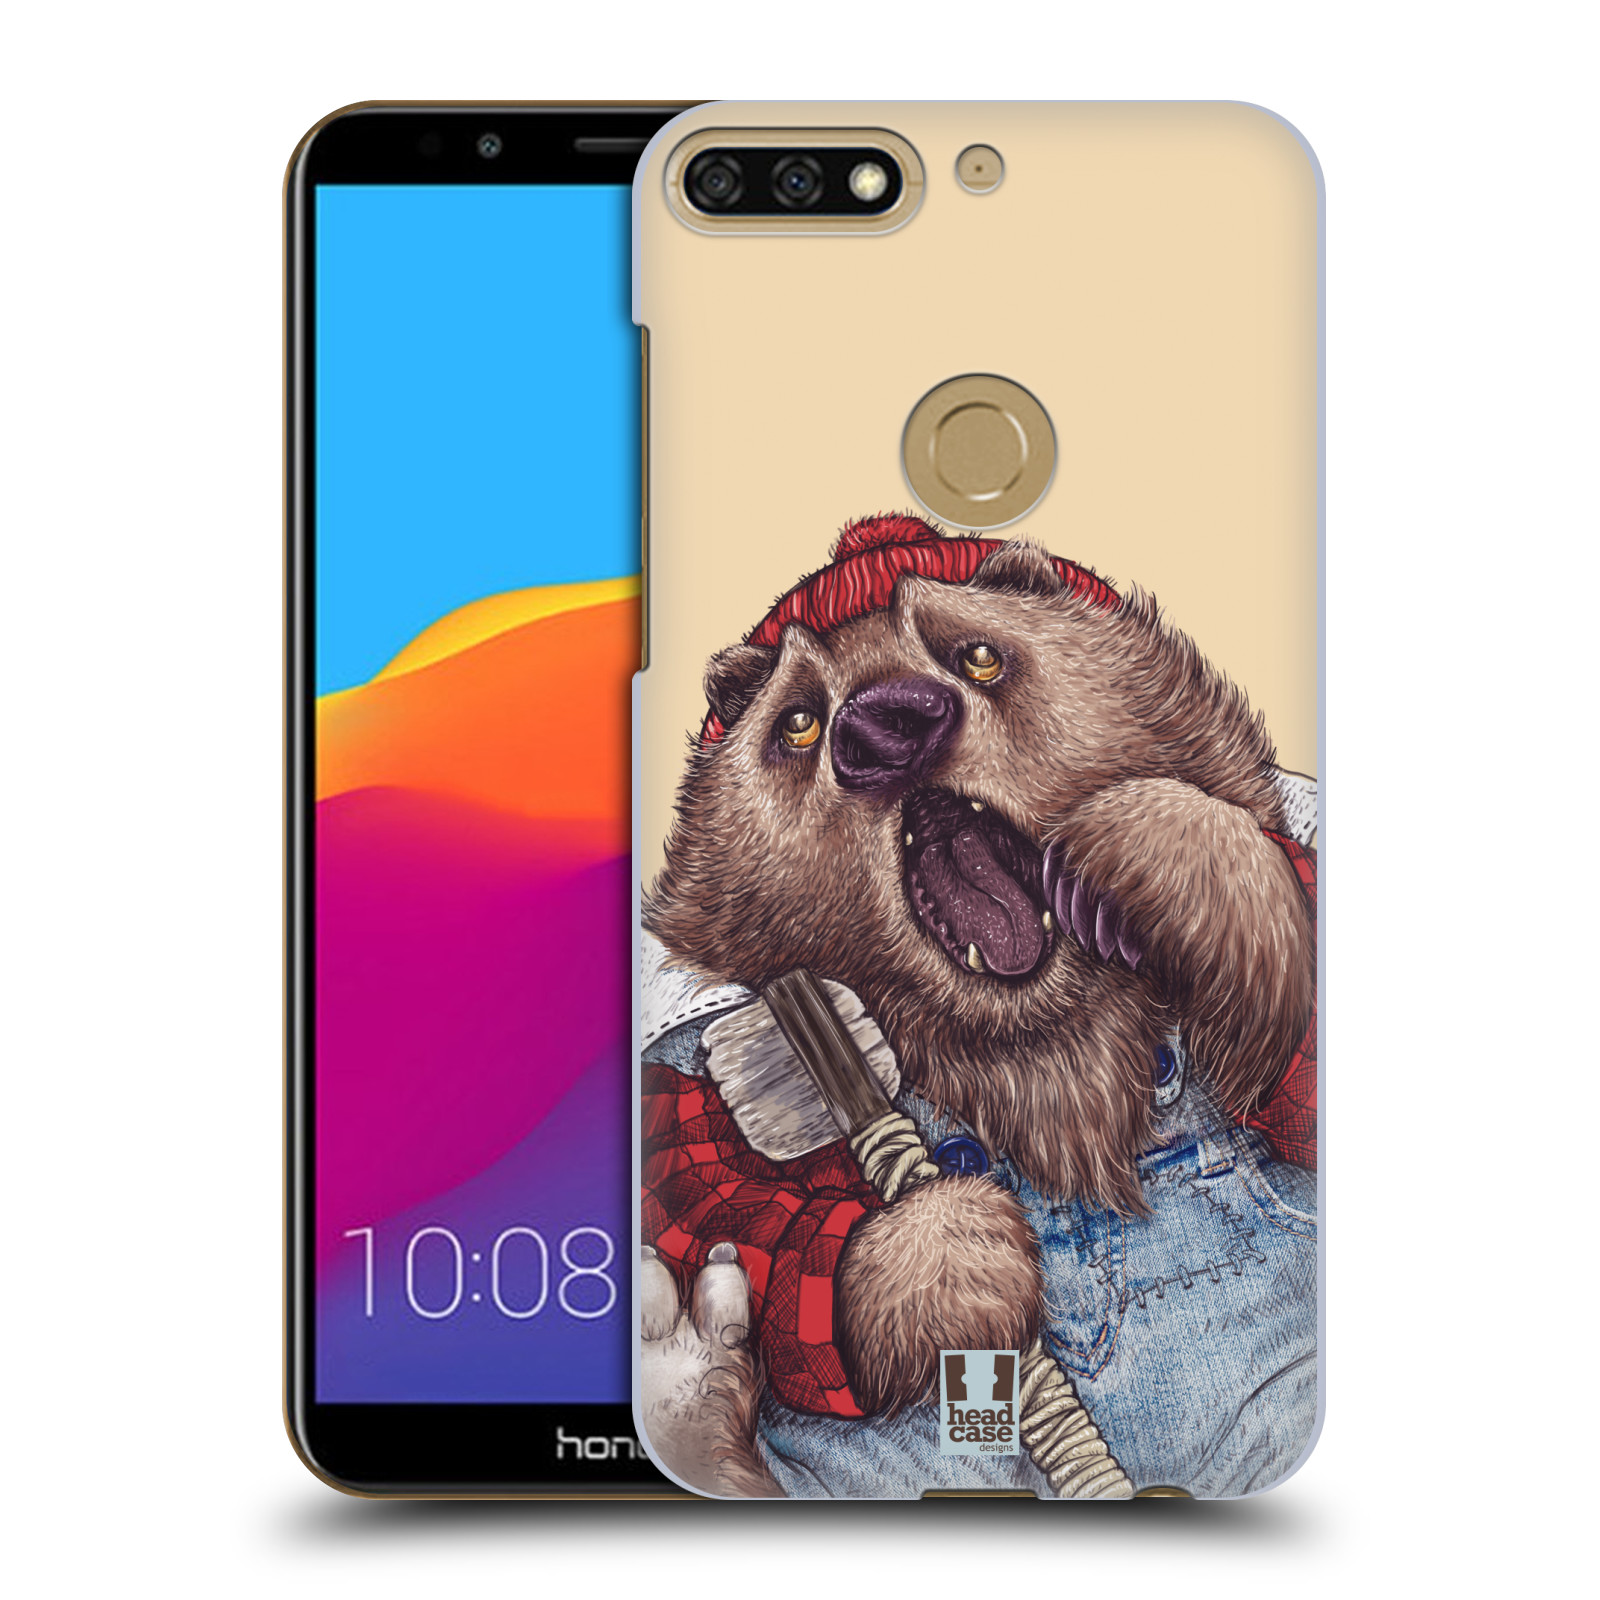 HEAD CASE plastový obal na mobil Honor 7c vzor Kreslená zvířátka medvěd